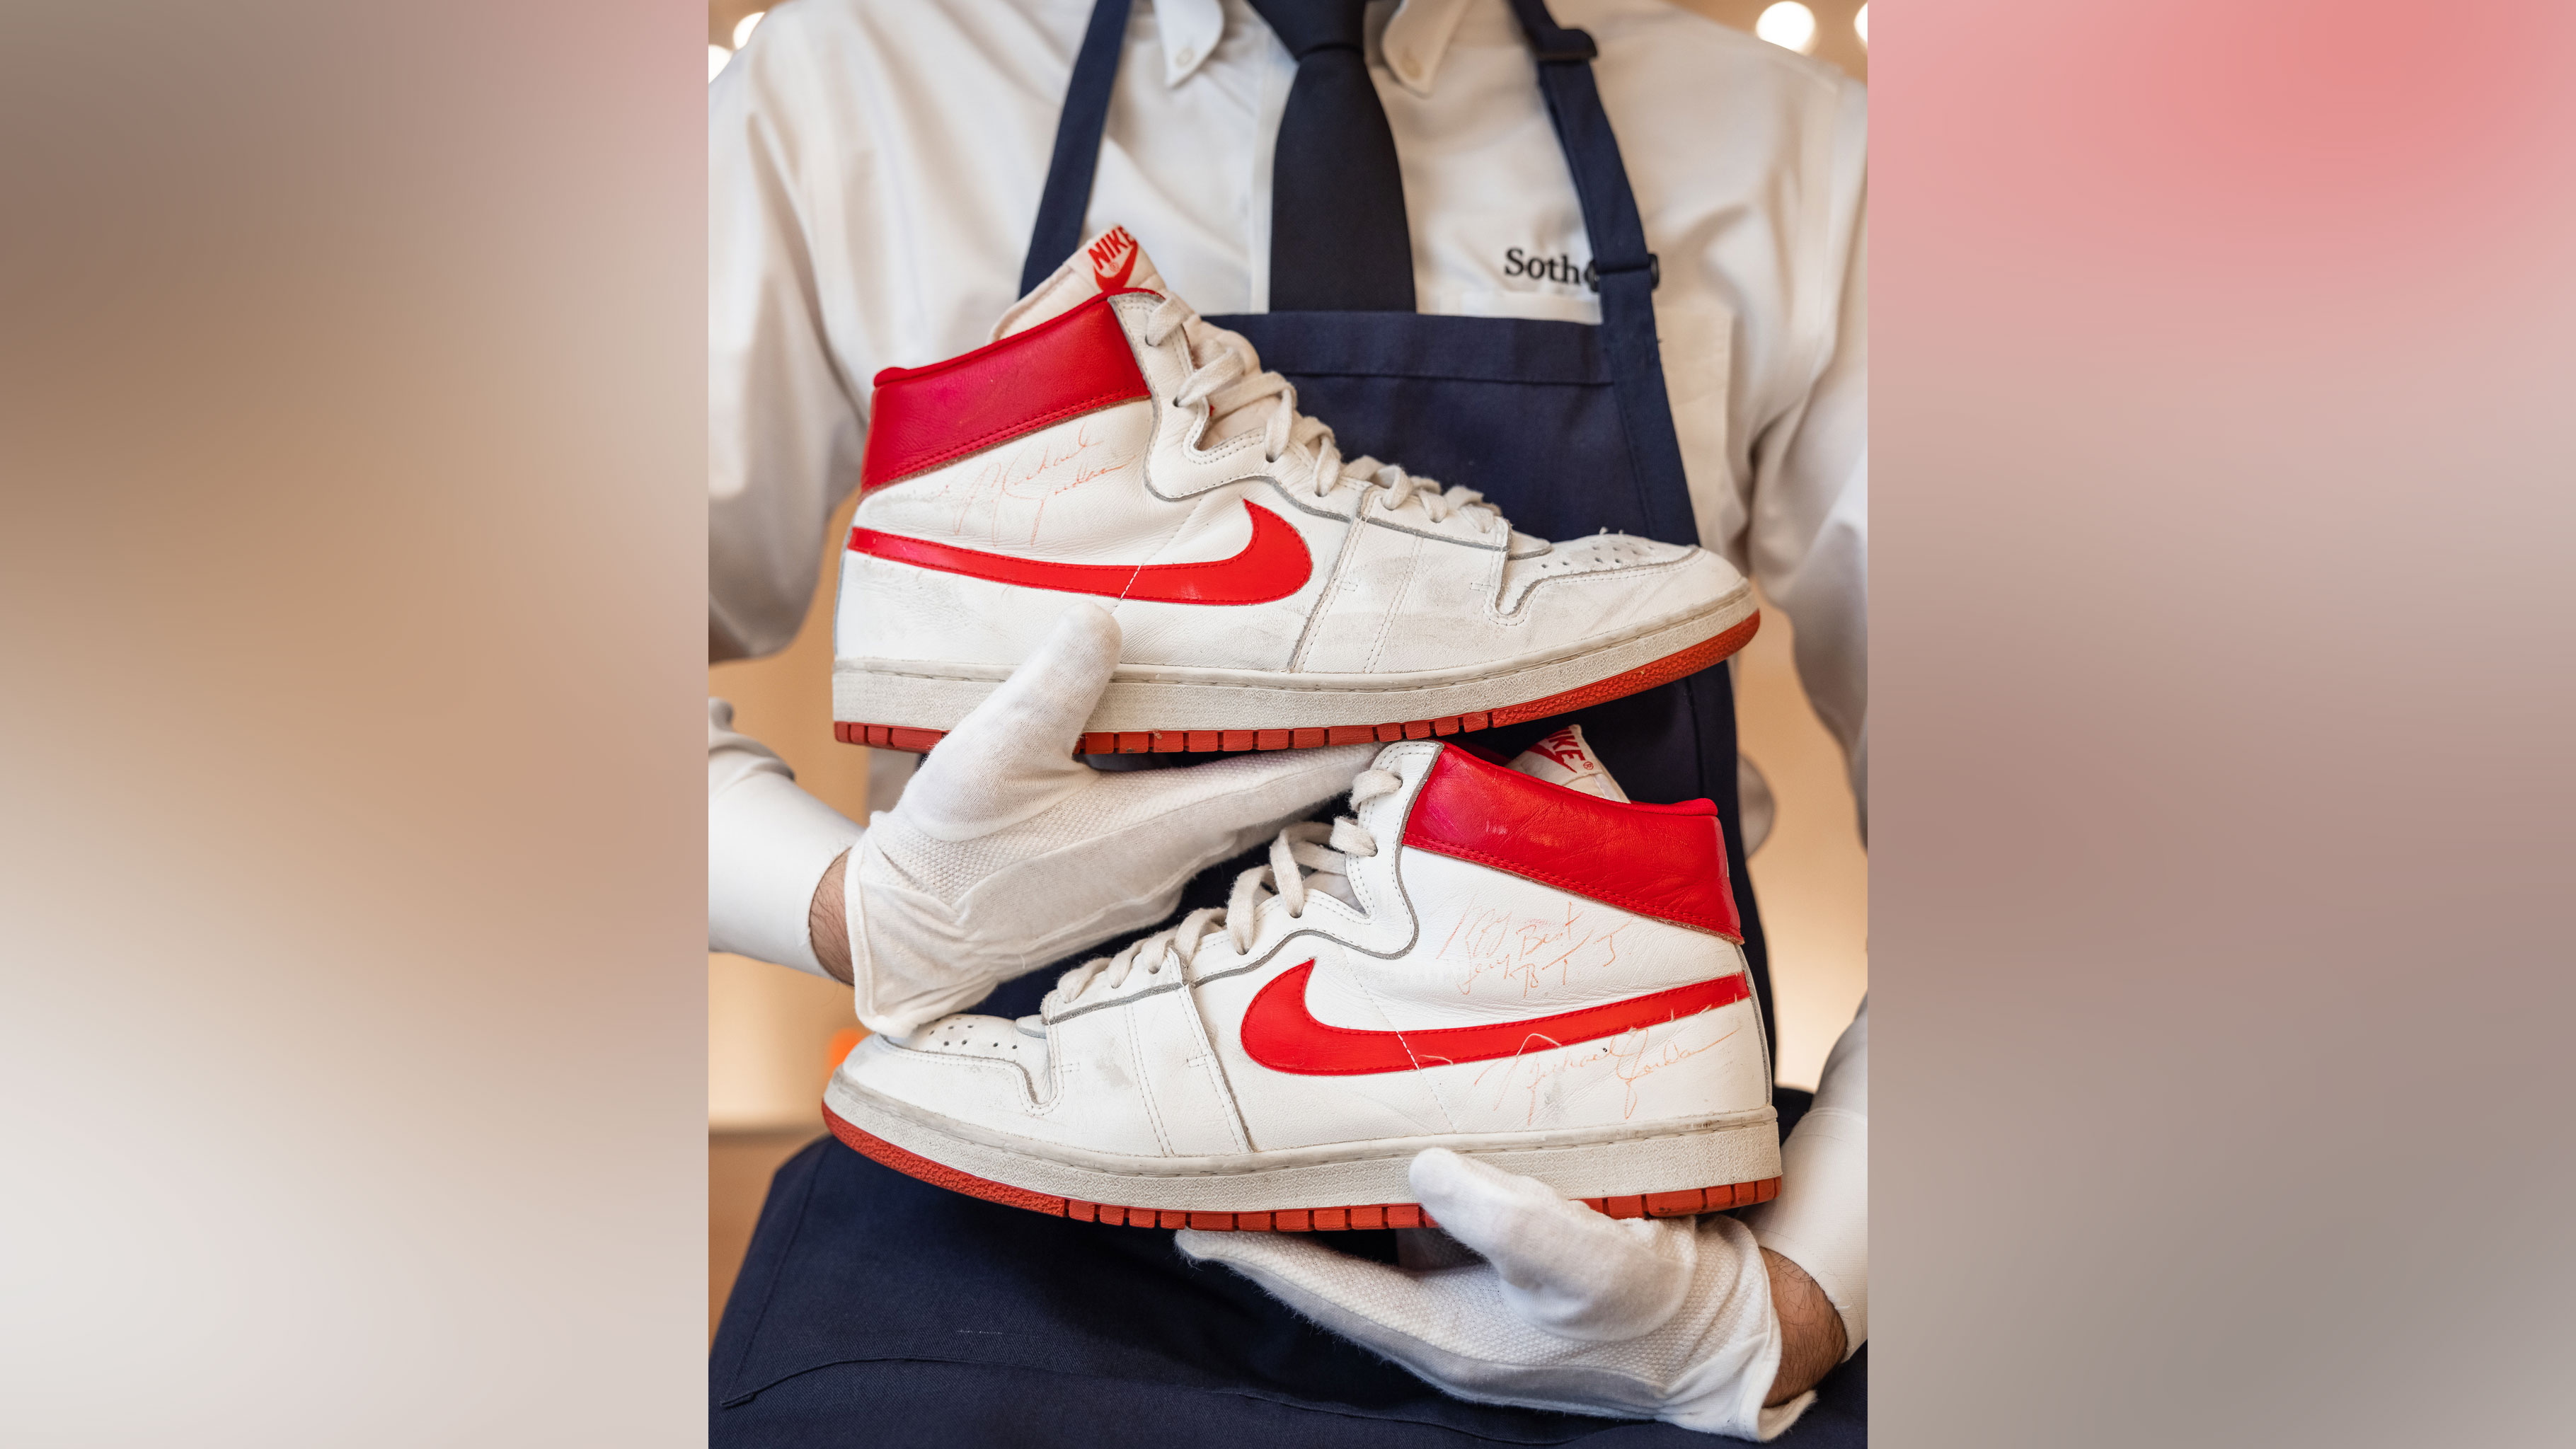 Michael Jordan's sneakers michael jordan trainers sell for record-breaking $1.47 million